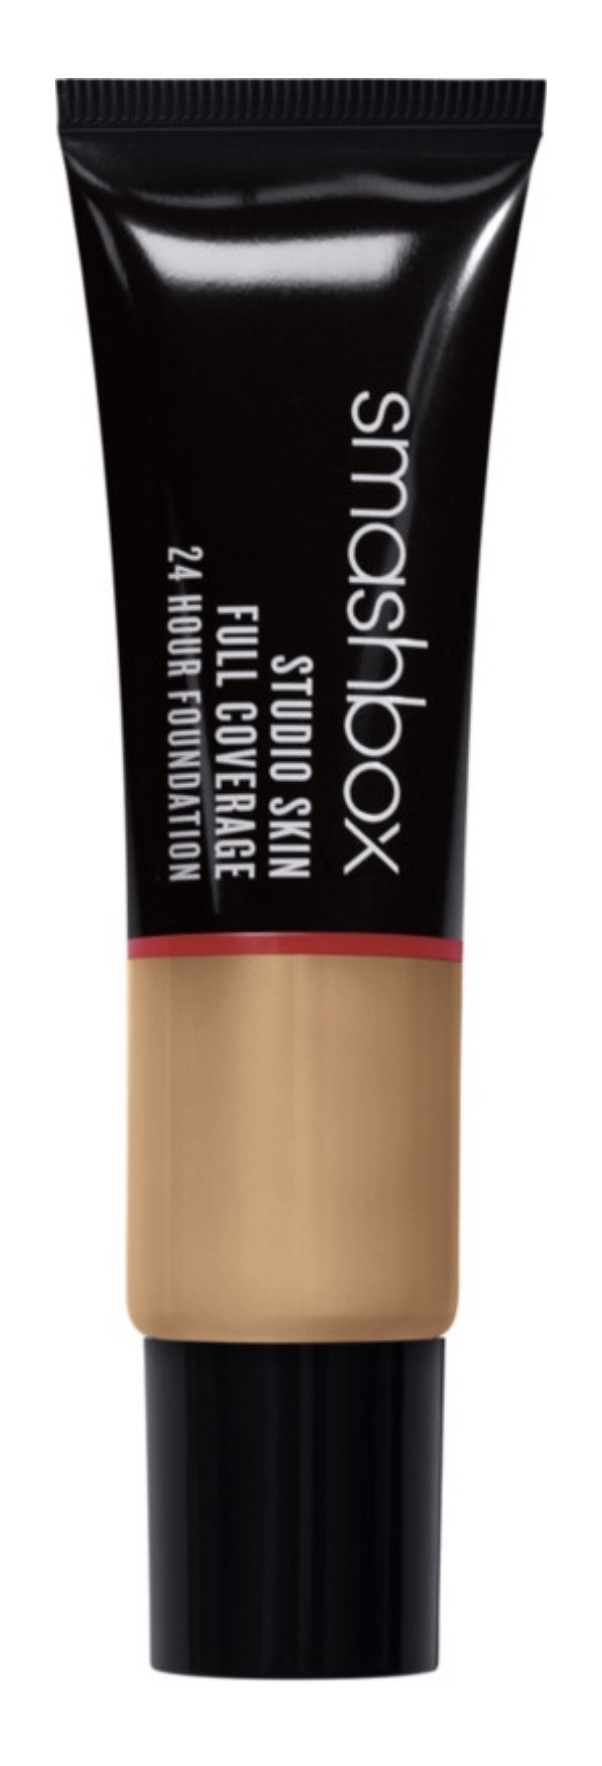 Smashbox Studio Skin Full Coverage 24 Hour Foundation